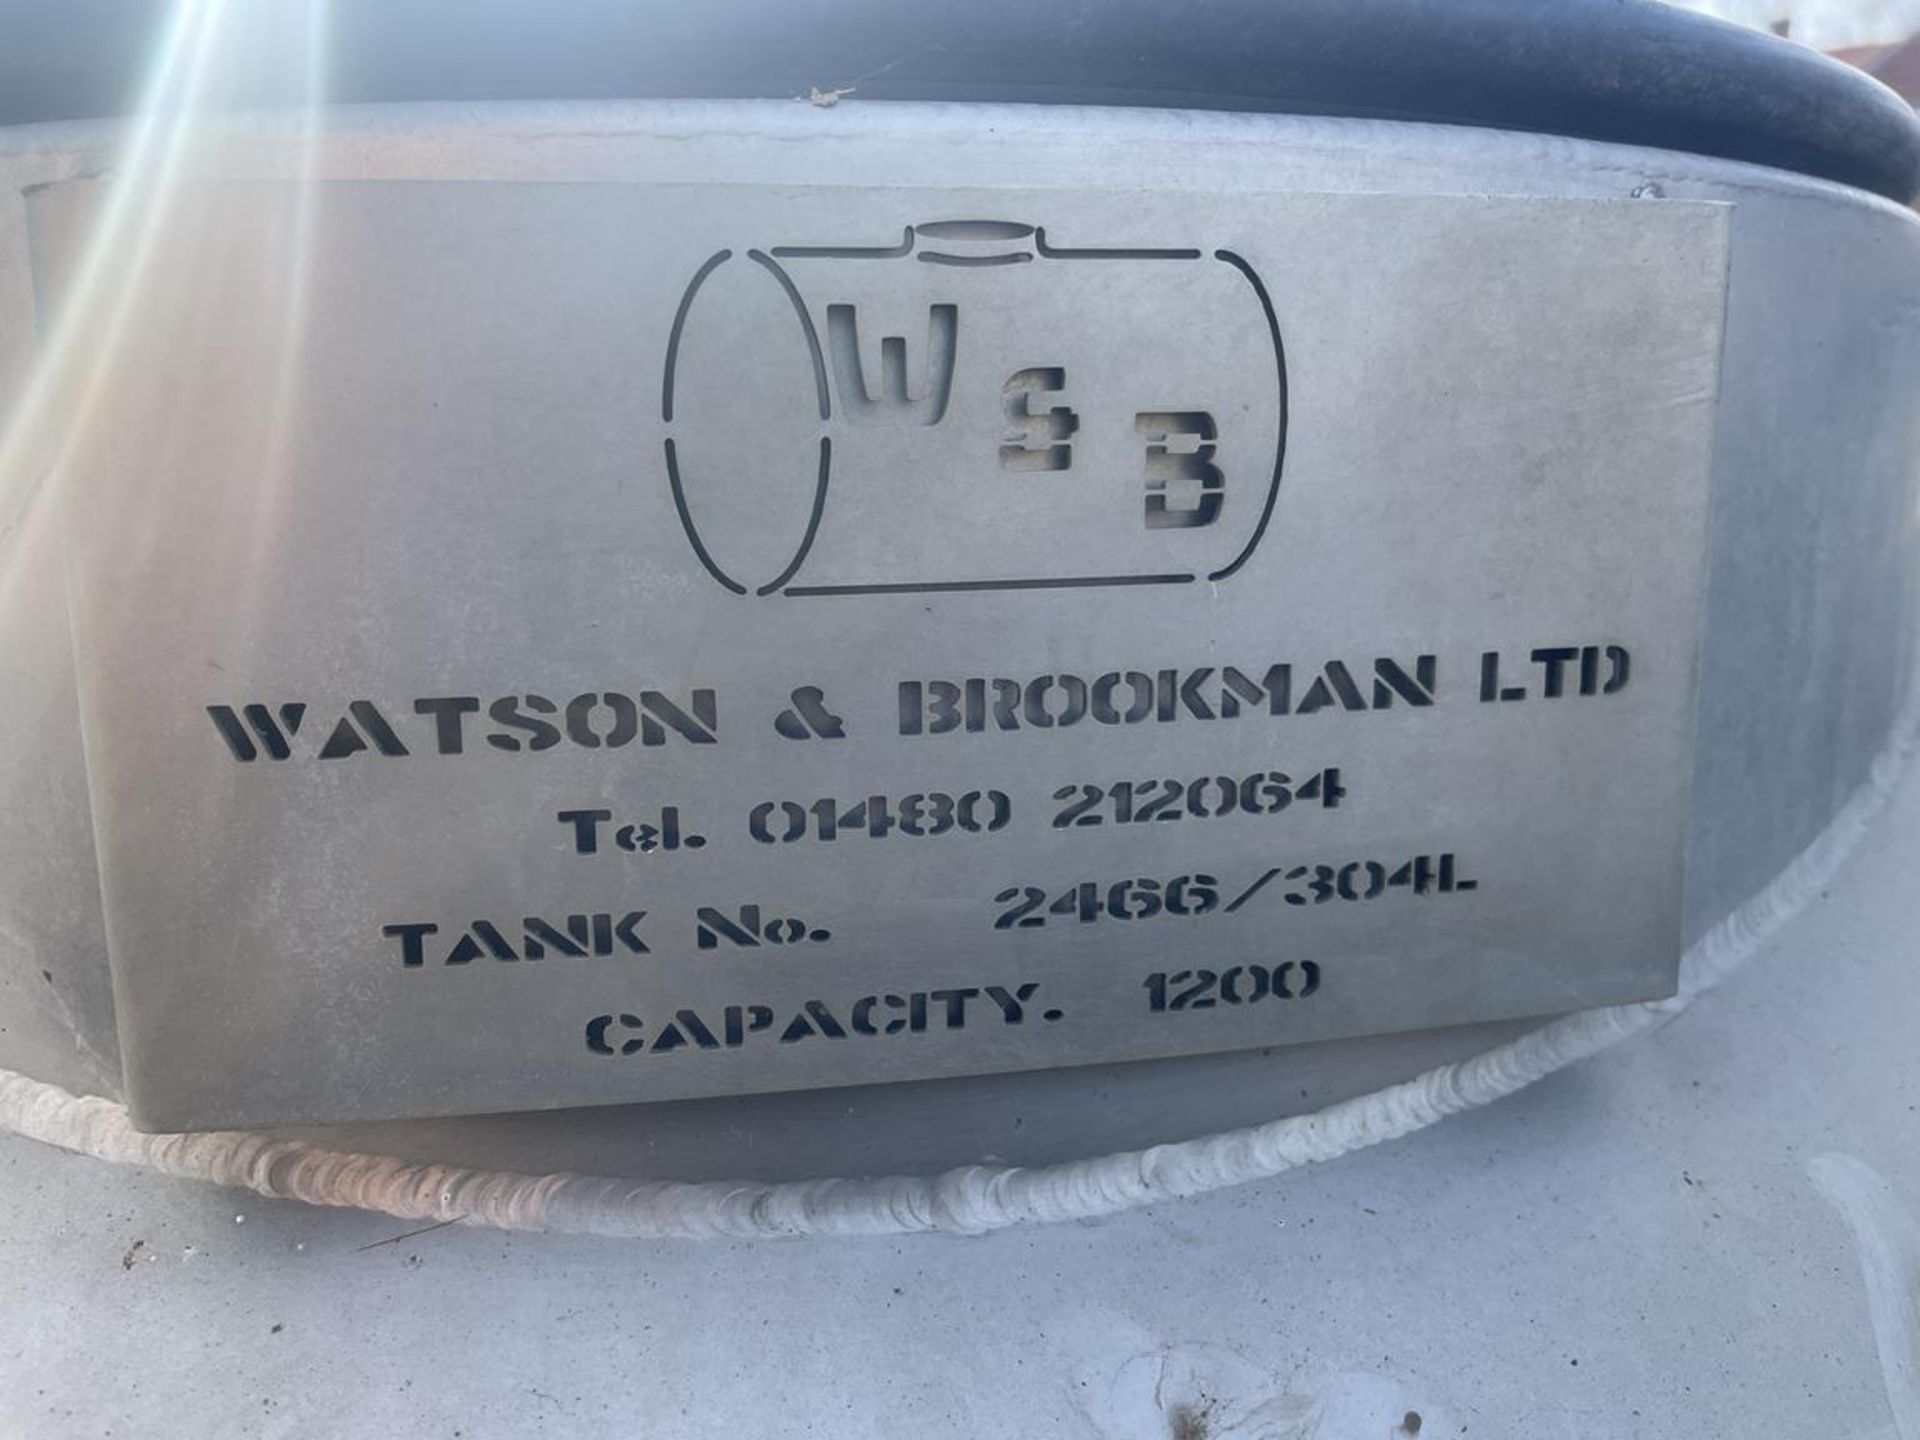 S & K Liquid Fertiliser Tank by Watson and Brookman, Tank No. 2466/304L, Capacity 1200 Litres, - Bild 4 aus 5